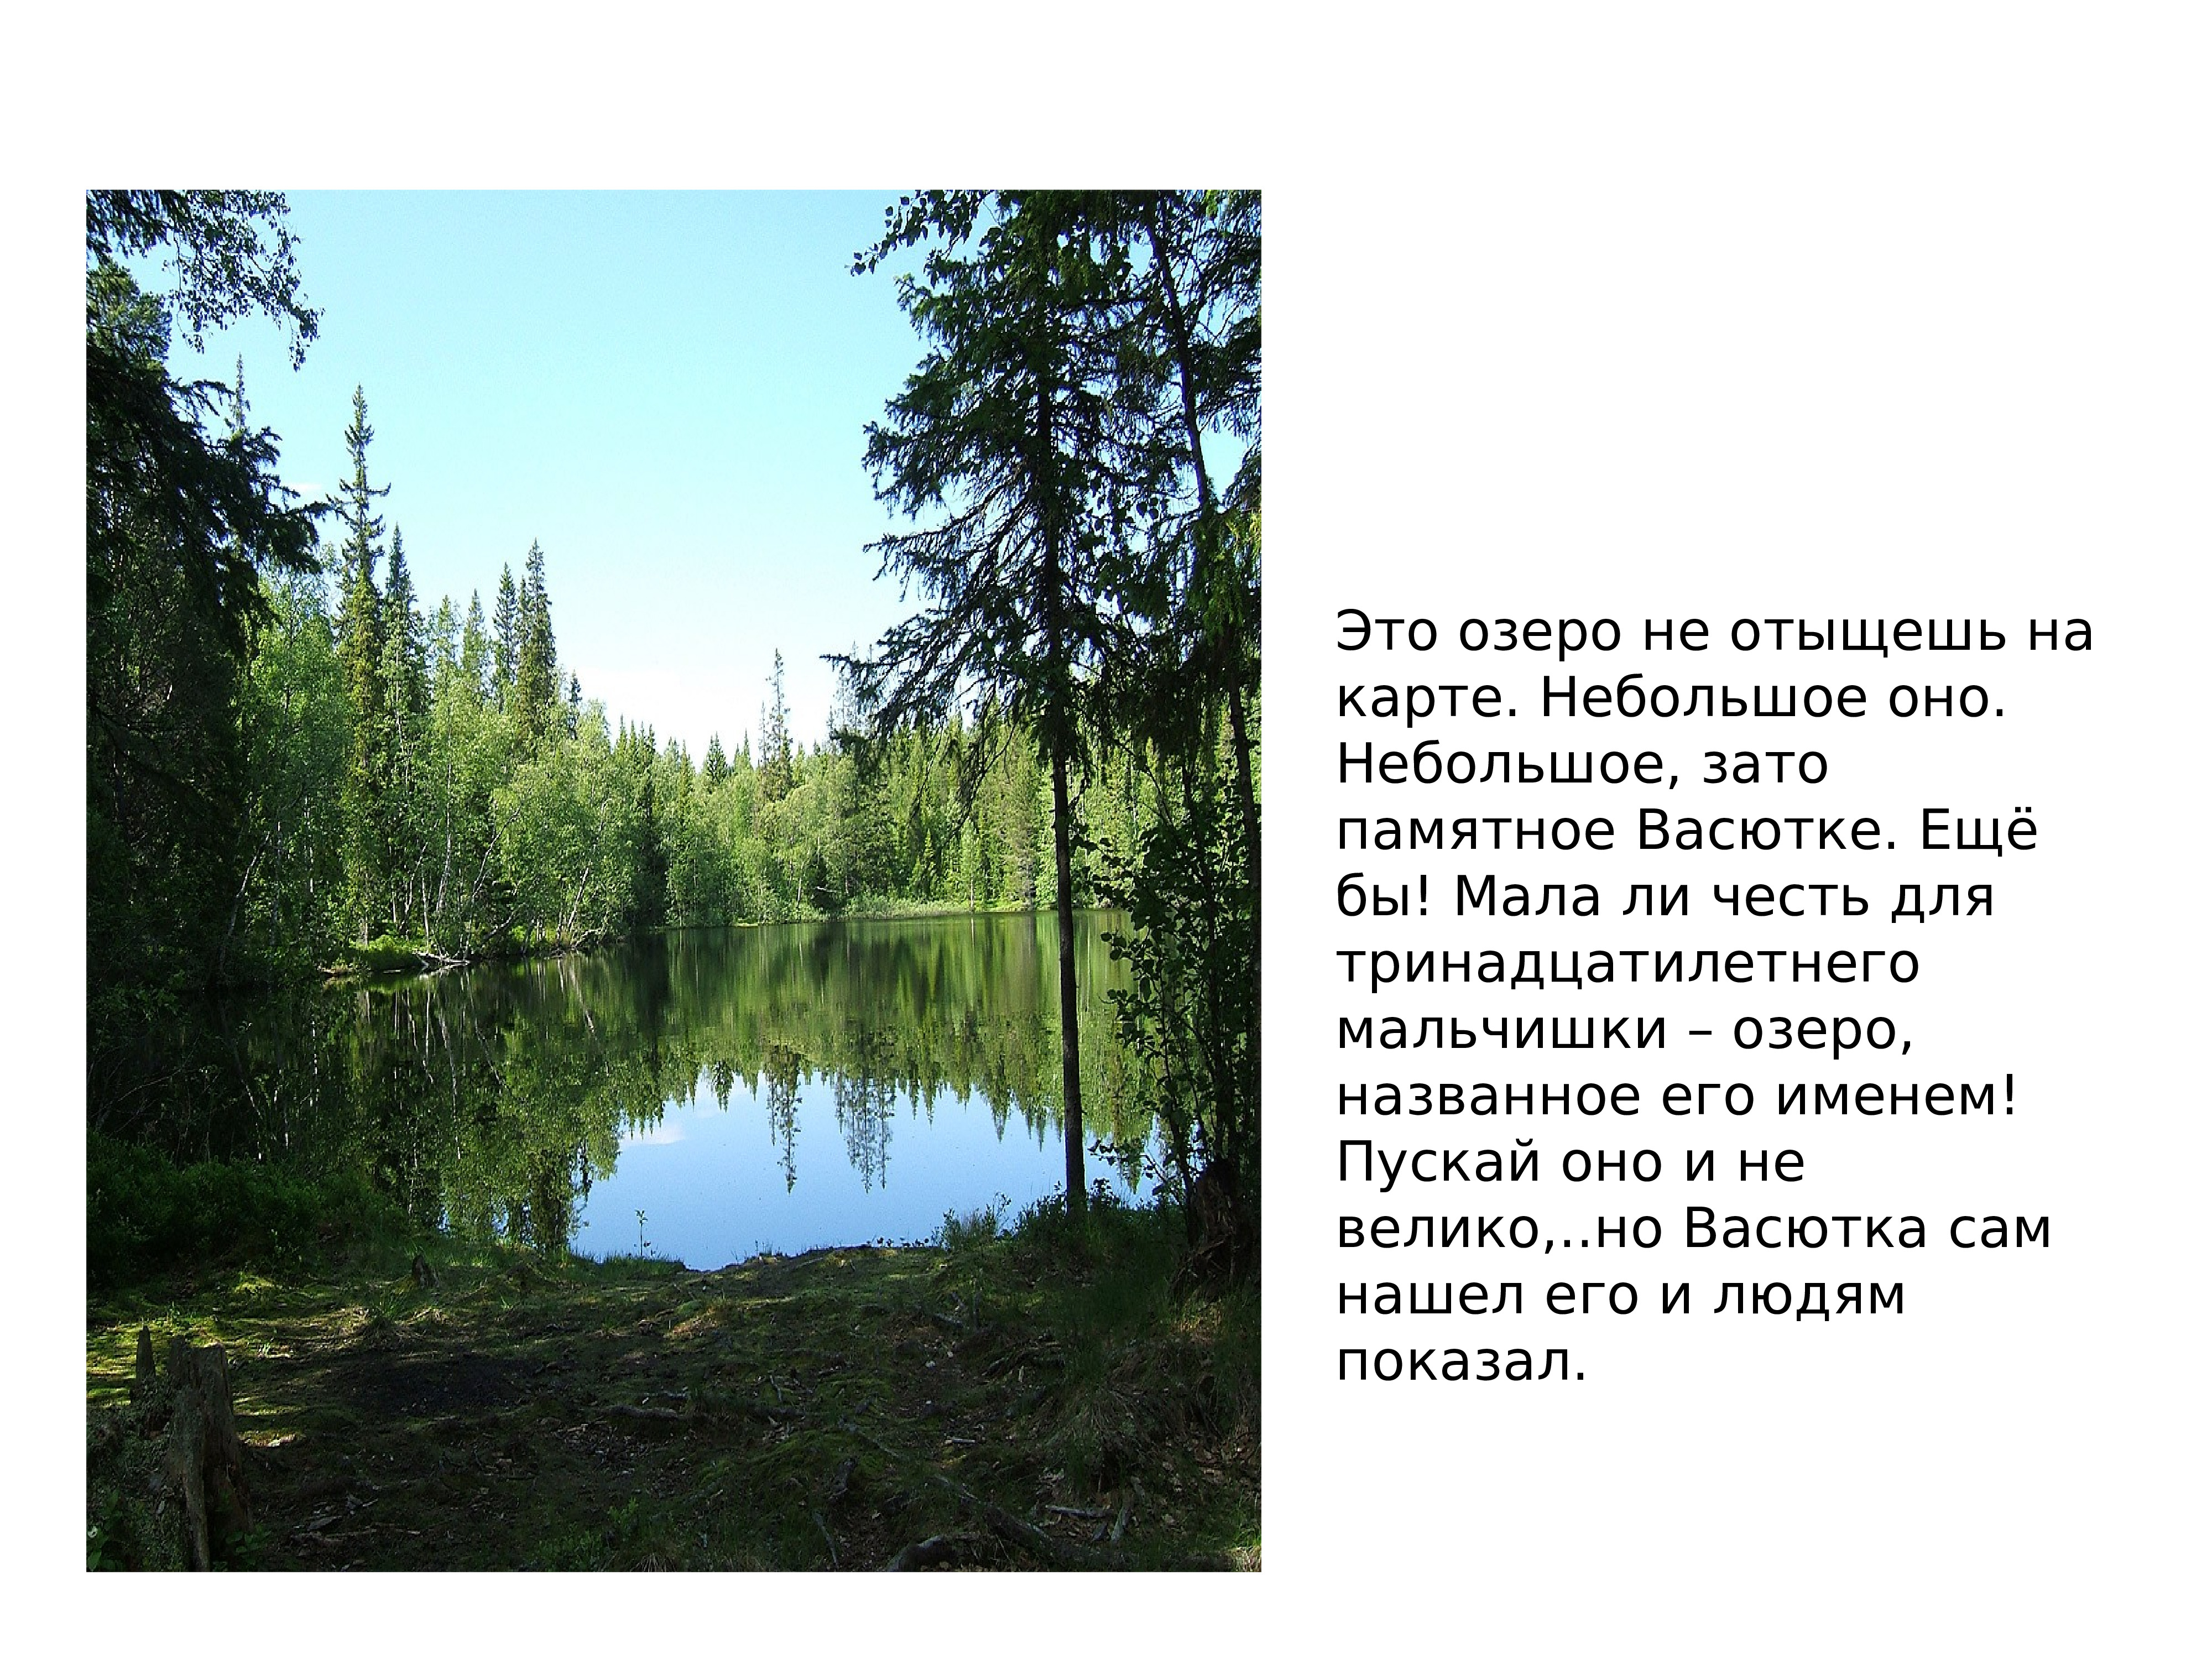 Васюткино озеро про тайгу. Низовья Енисея Васюткино озеро. Васюткино озеро Астафьев Тайга. Васюткино озеро Красноярский край. Васюткино озеро озеро карта.